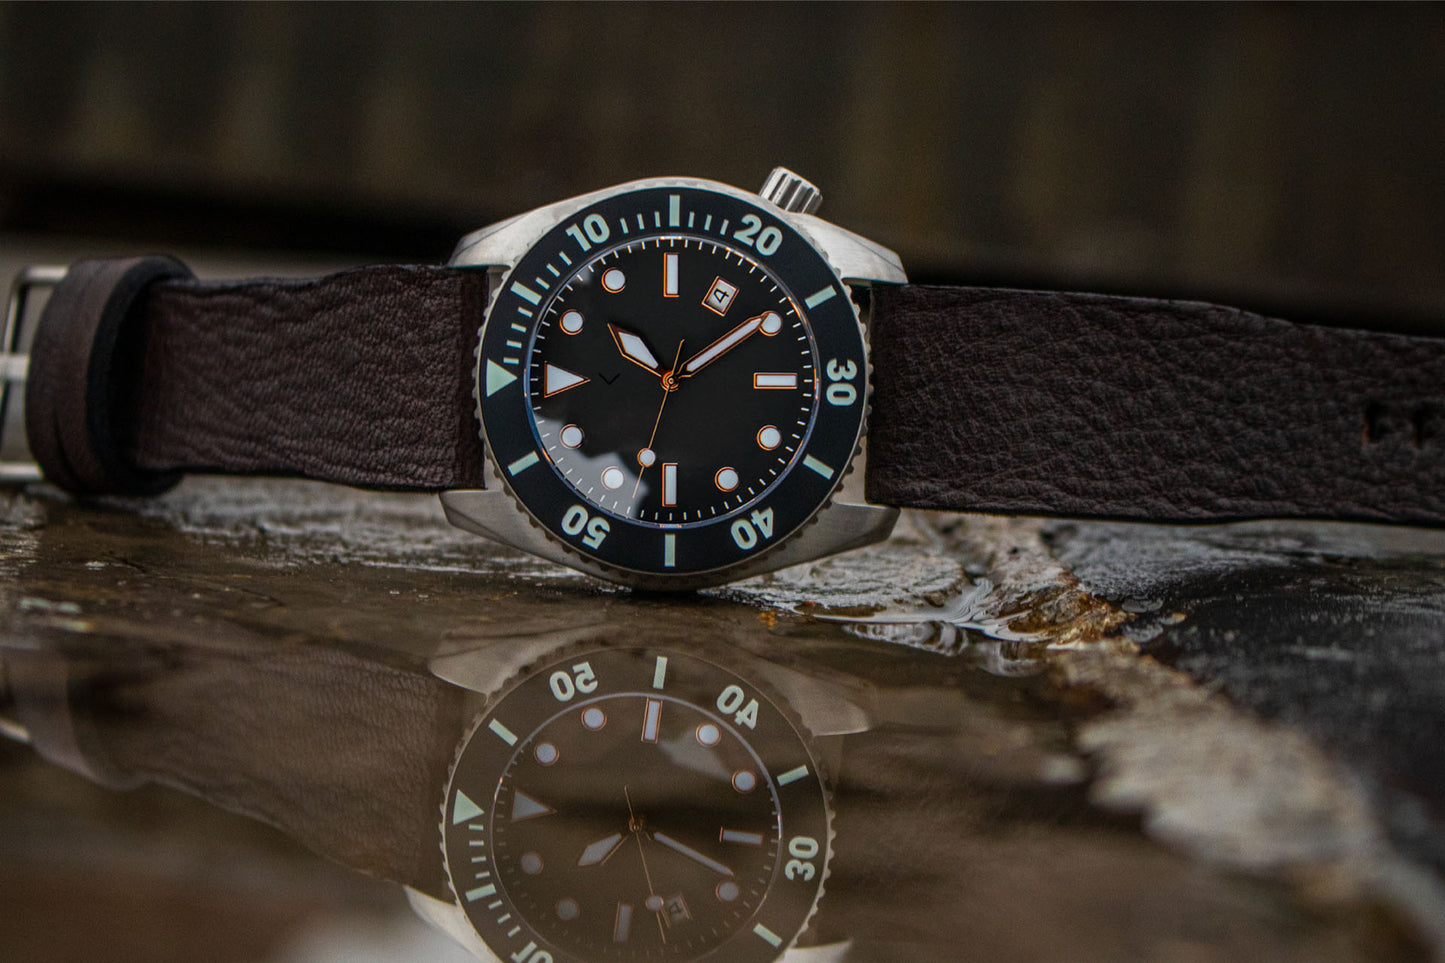 Enoksen 'Deep Dive' E11/A Special Edition- Diver's Watch - 44mm